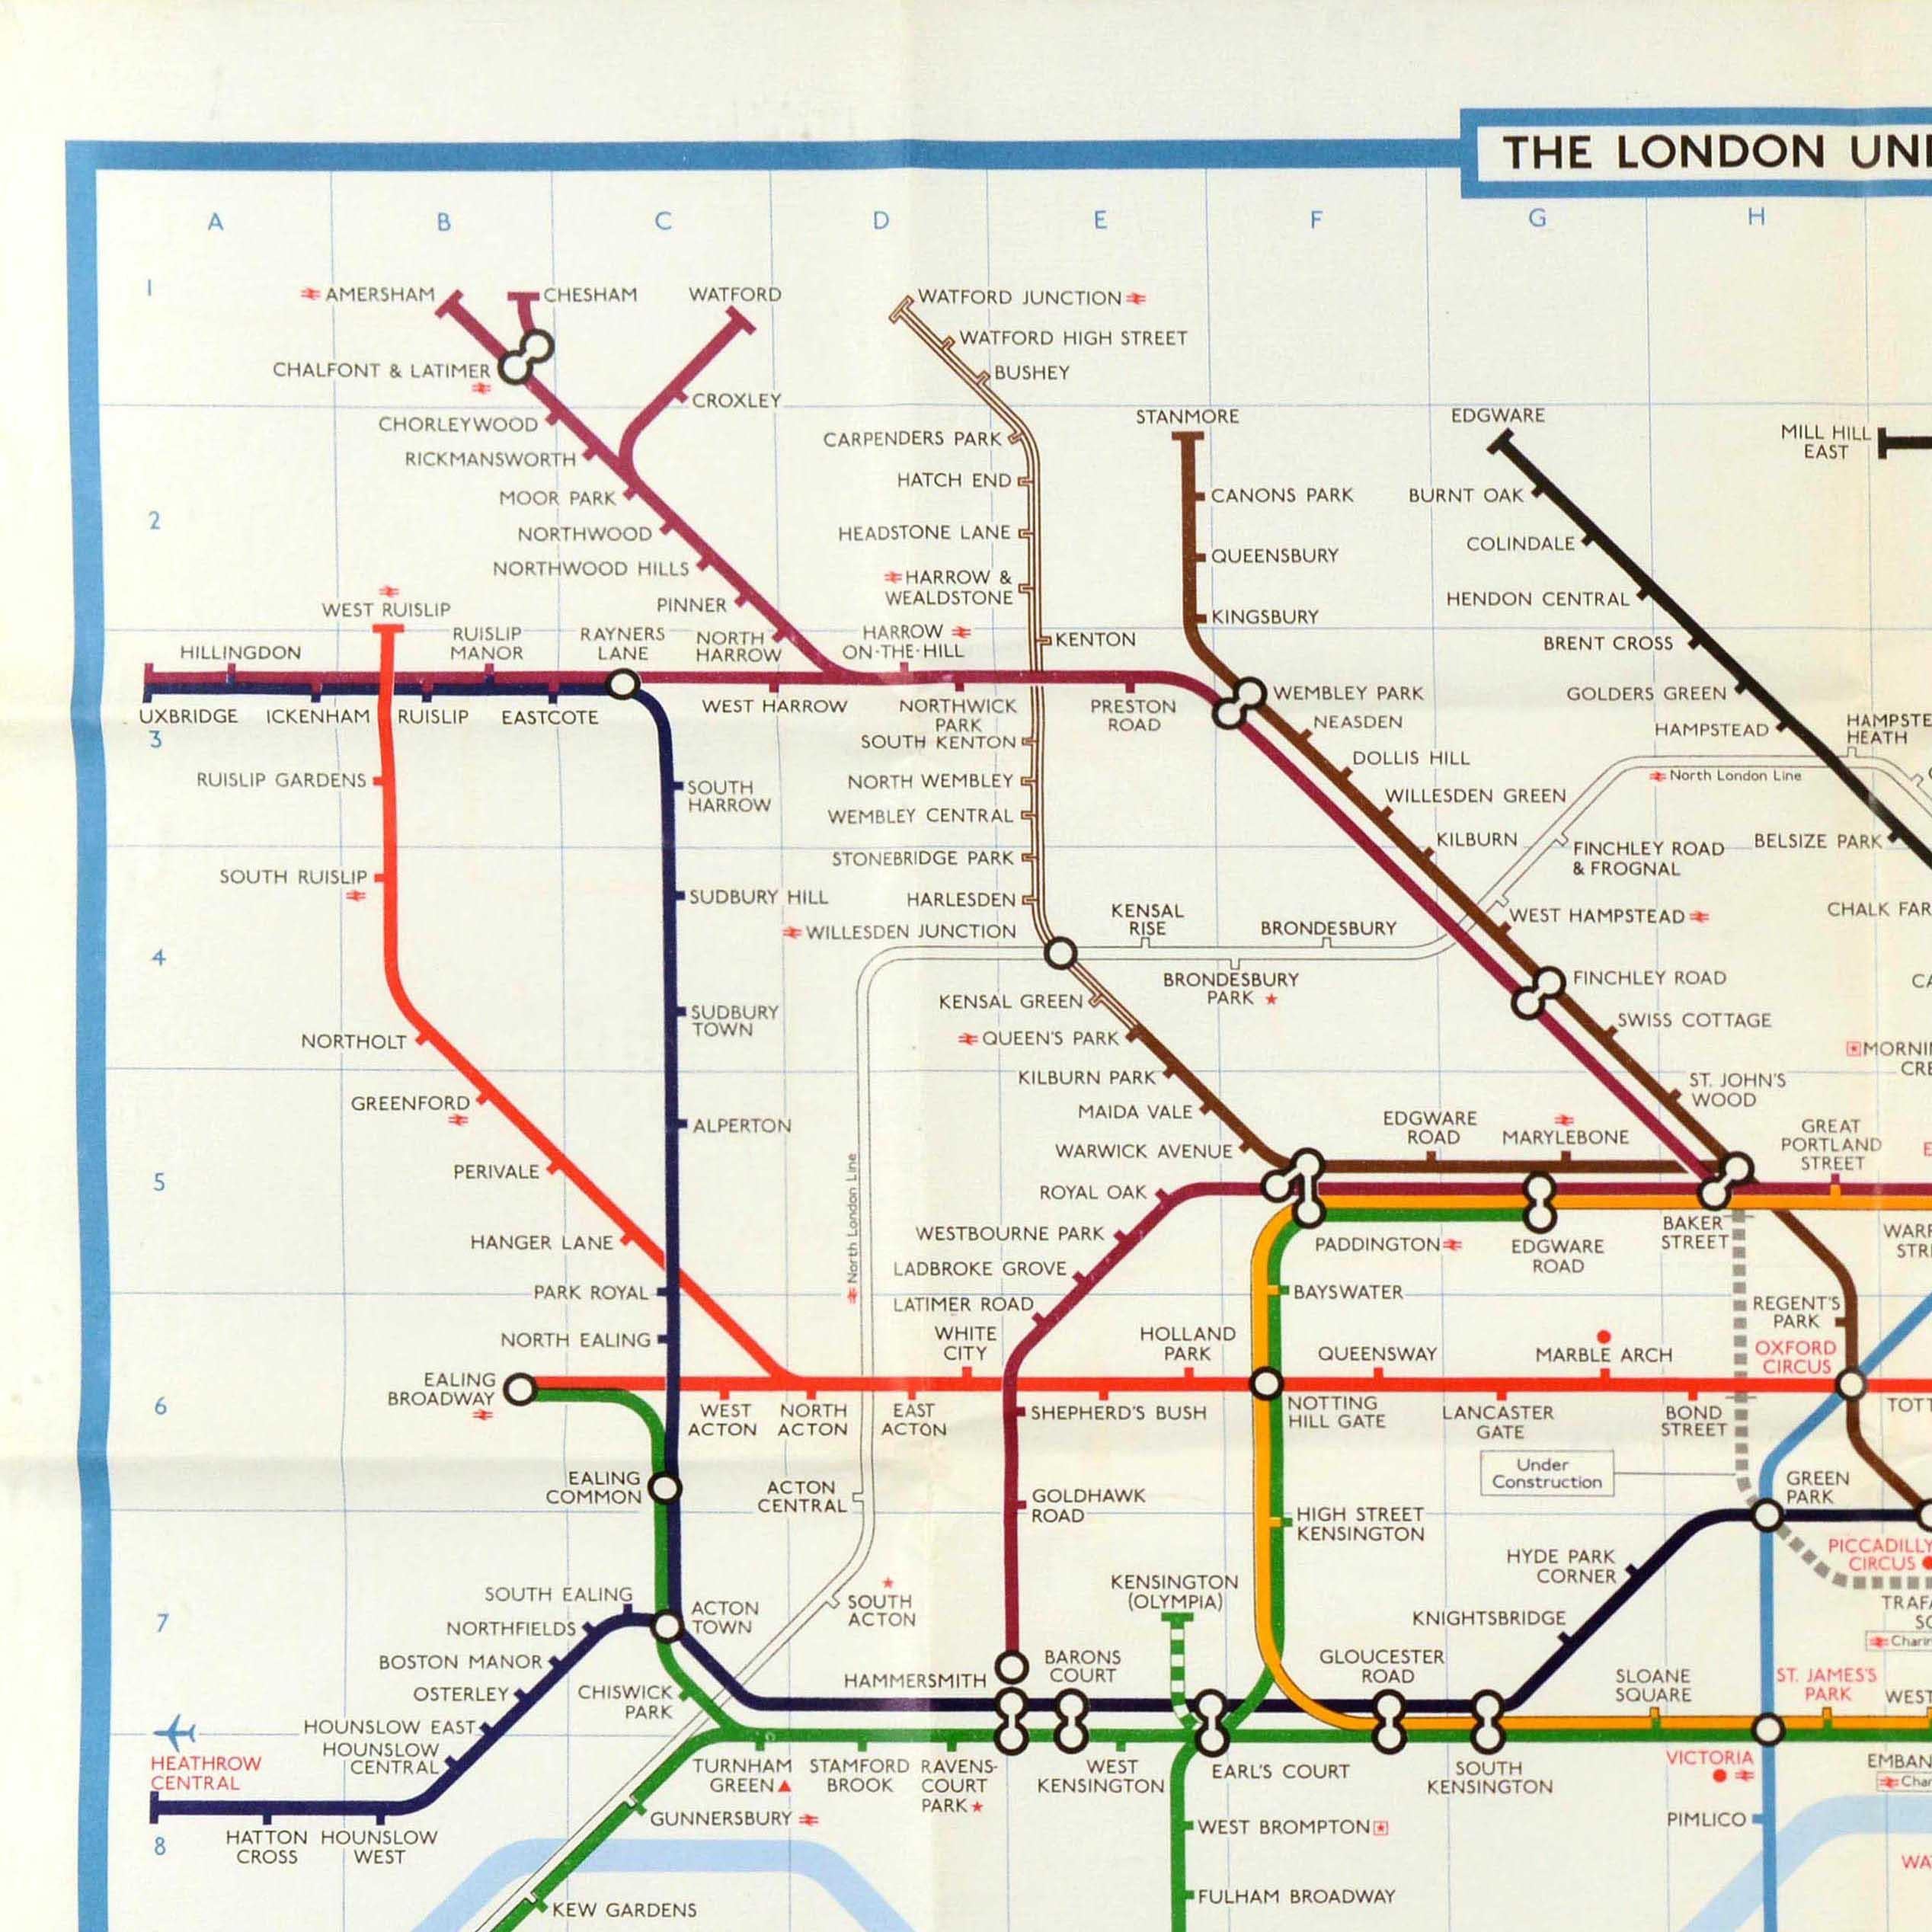 Original Vintage Travel Poster London Underground Map Jubilee Line Paul Garbutt - Print by Unknown